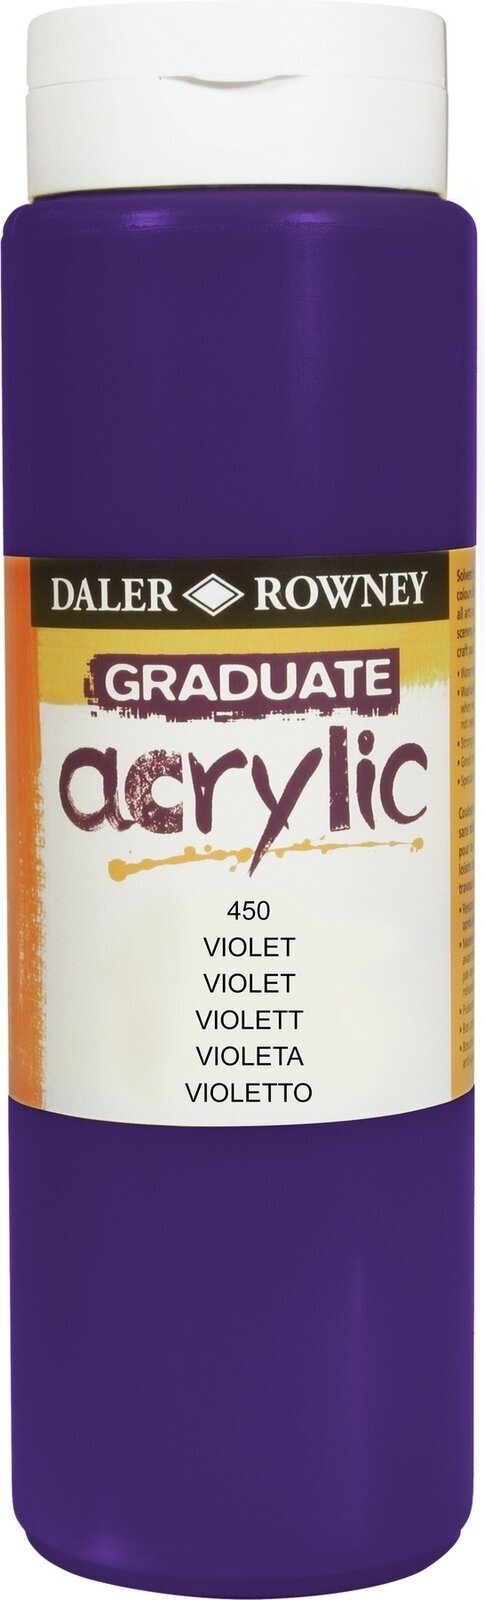 Akrylmaling Daler Rowney Graduate Akrylmaling Violet 500 ml 1 stk.